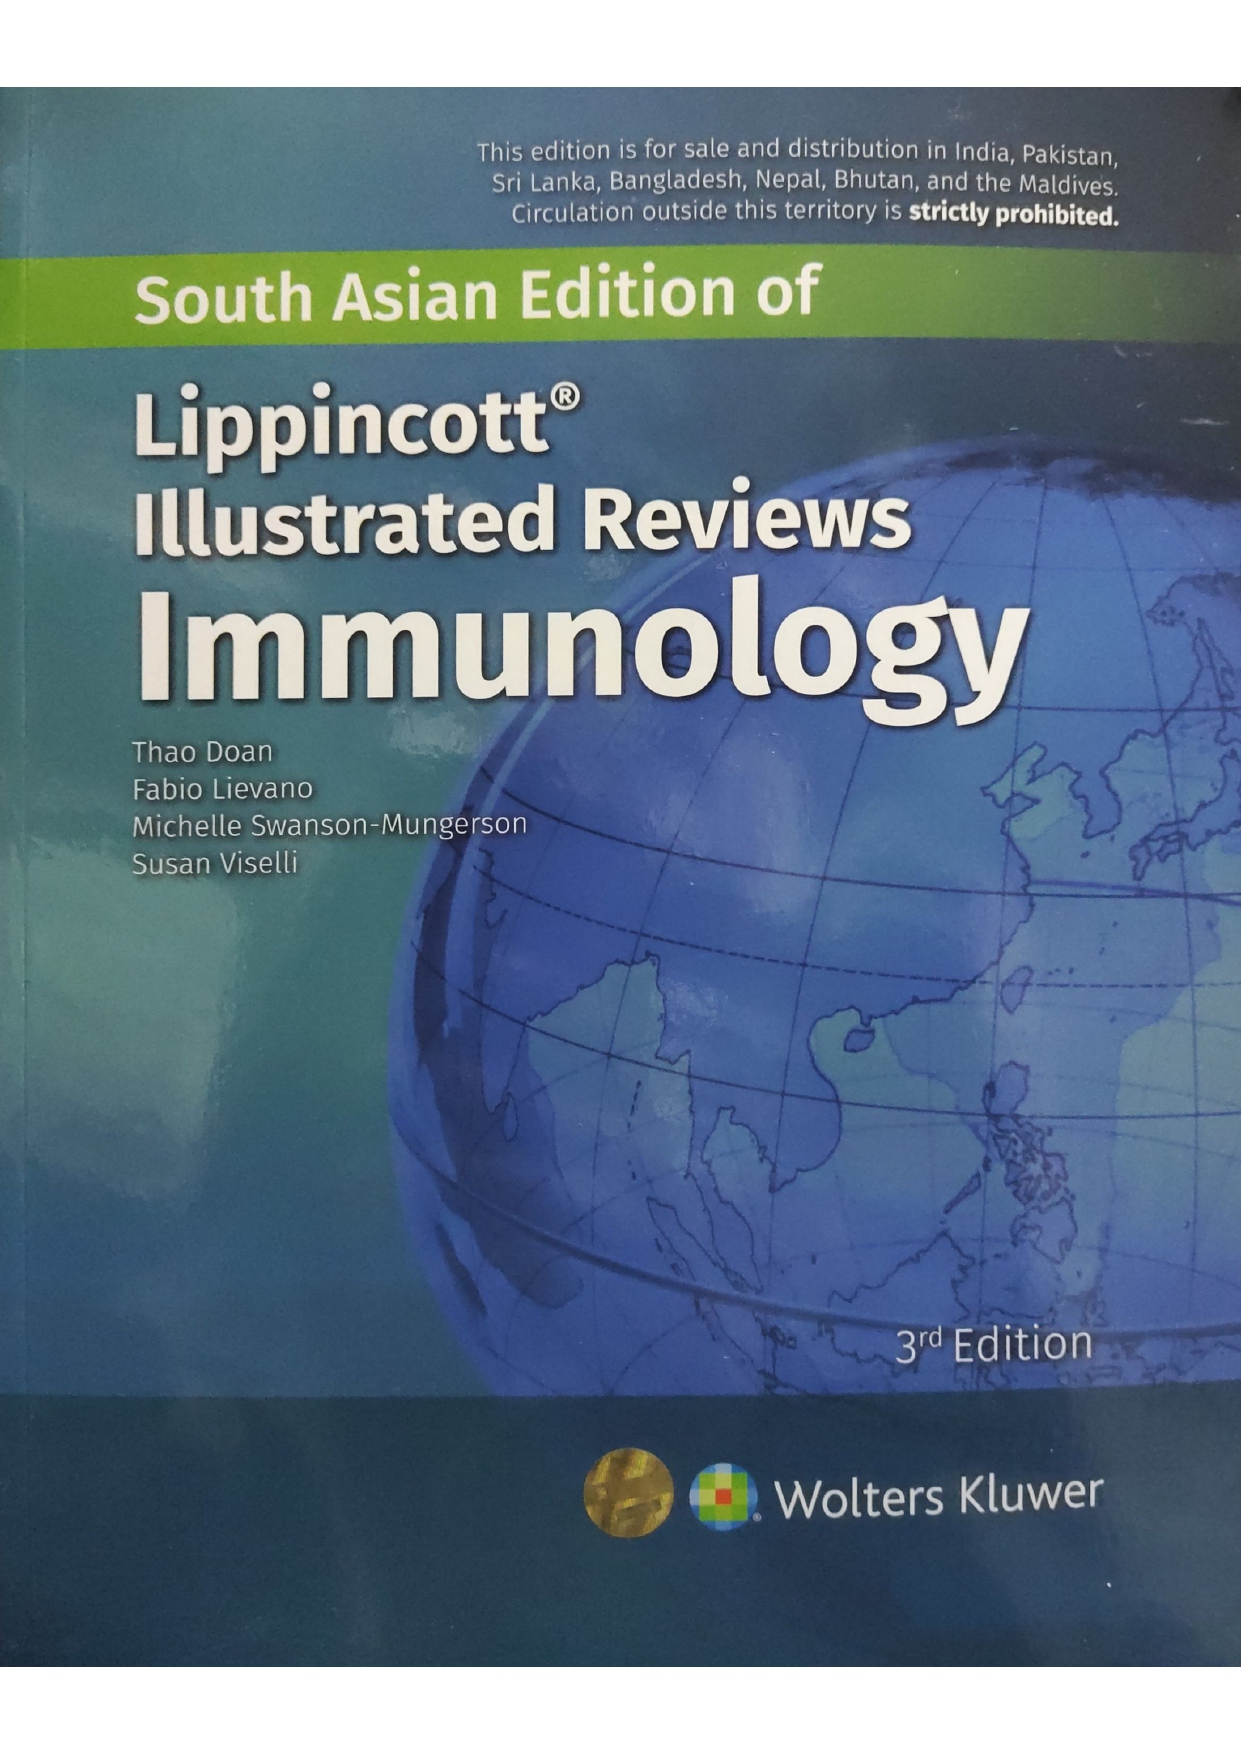 lippincott illustrated reviews immunology pdf free download